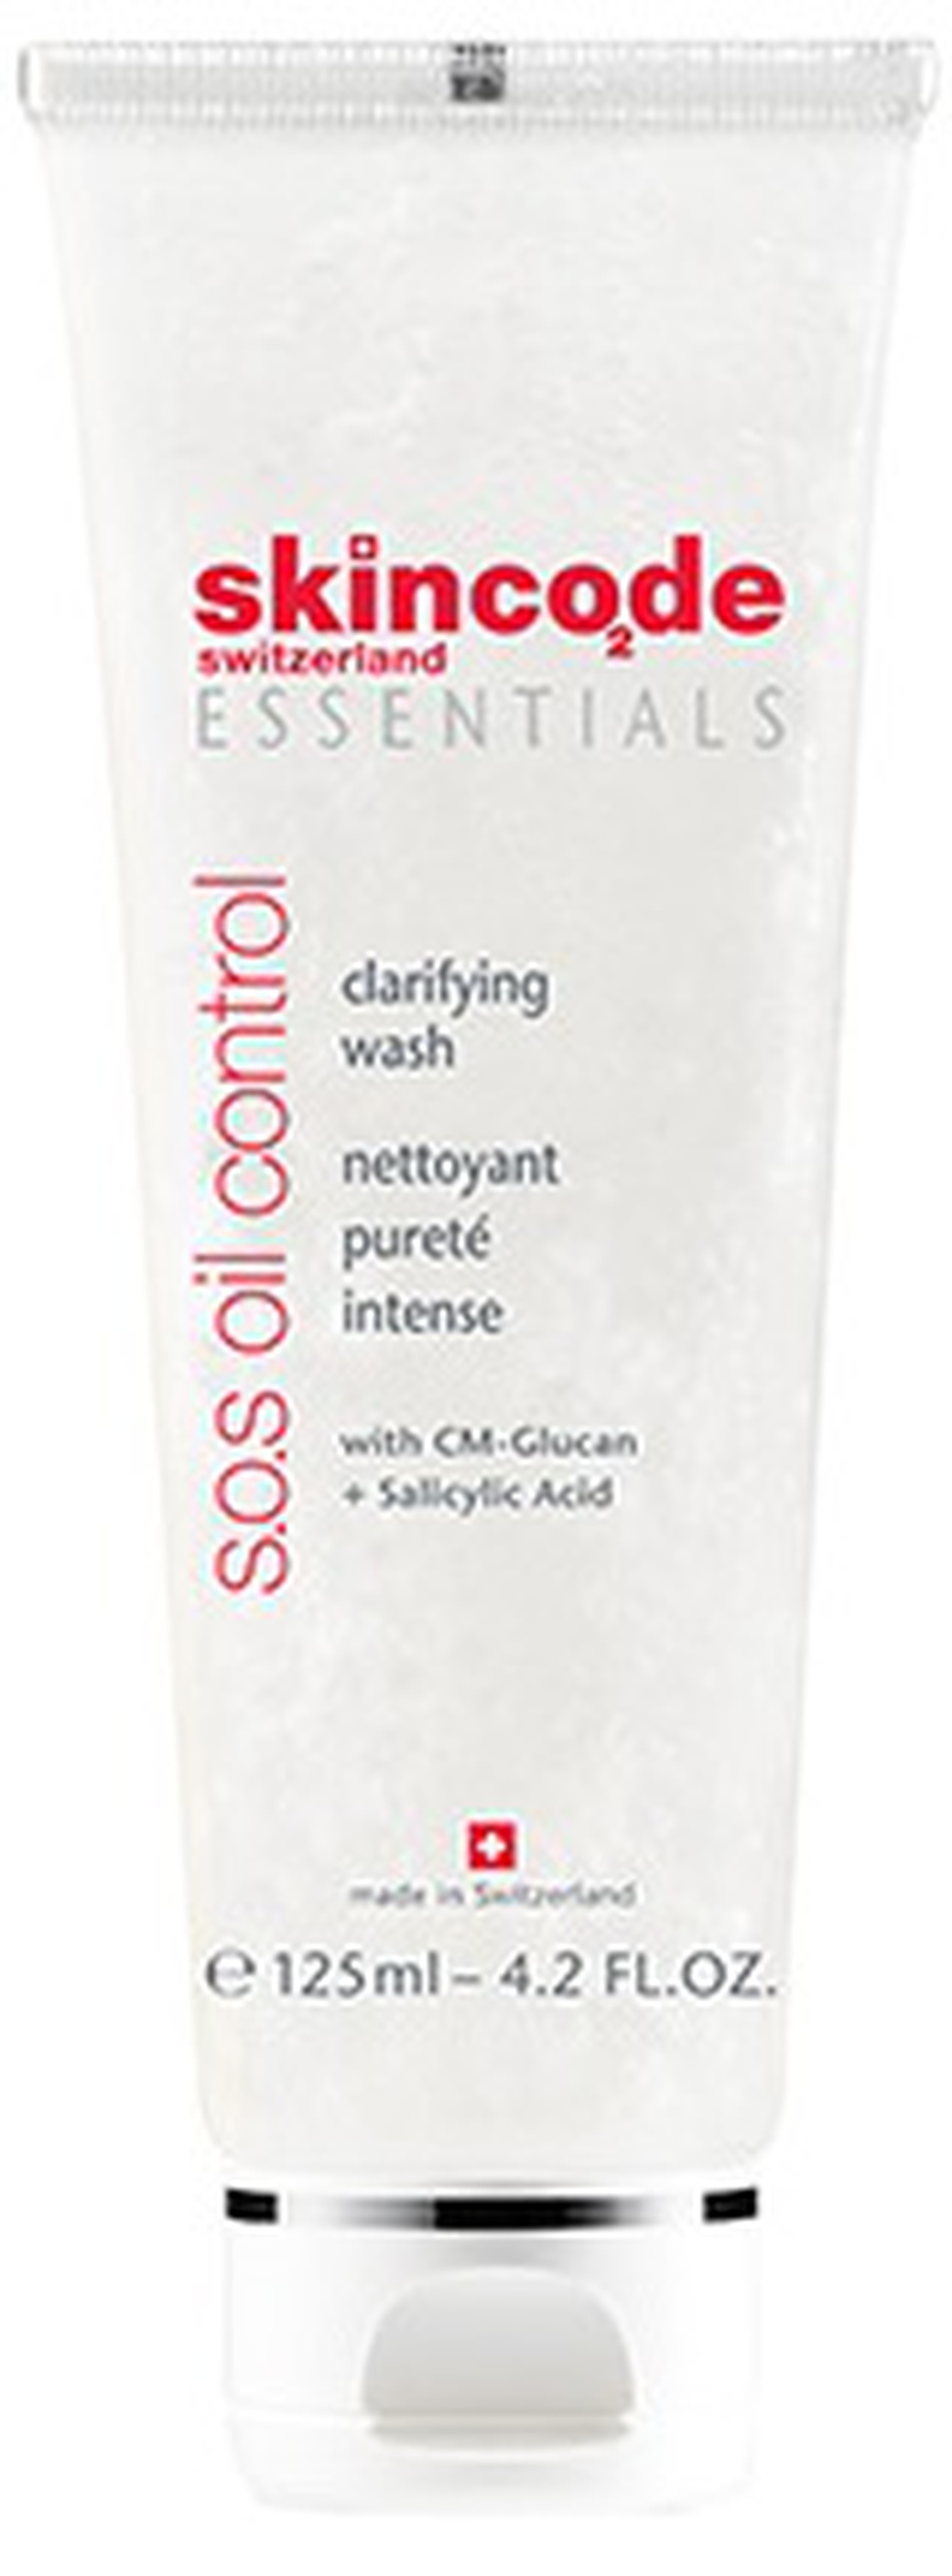 SkinCode S.O.S Oil Control очищающее средство для жирной кожи, 125 мл фото